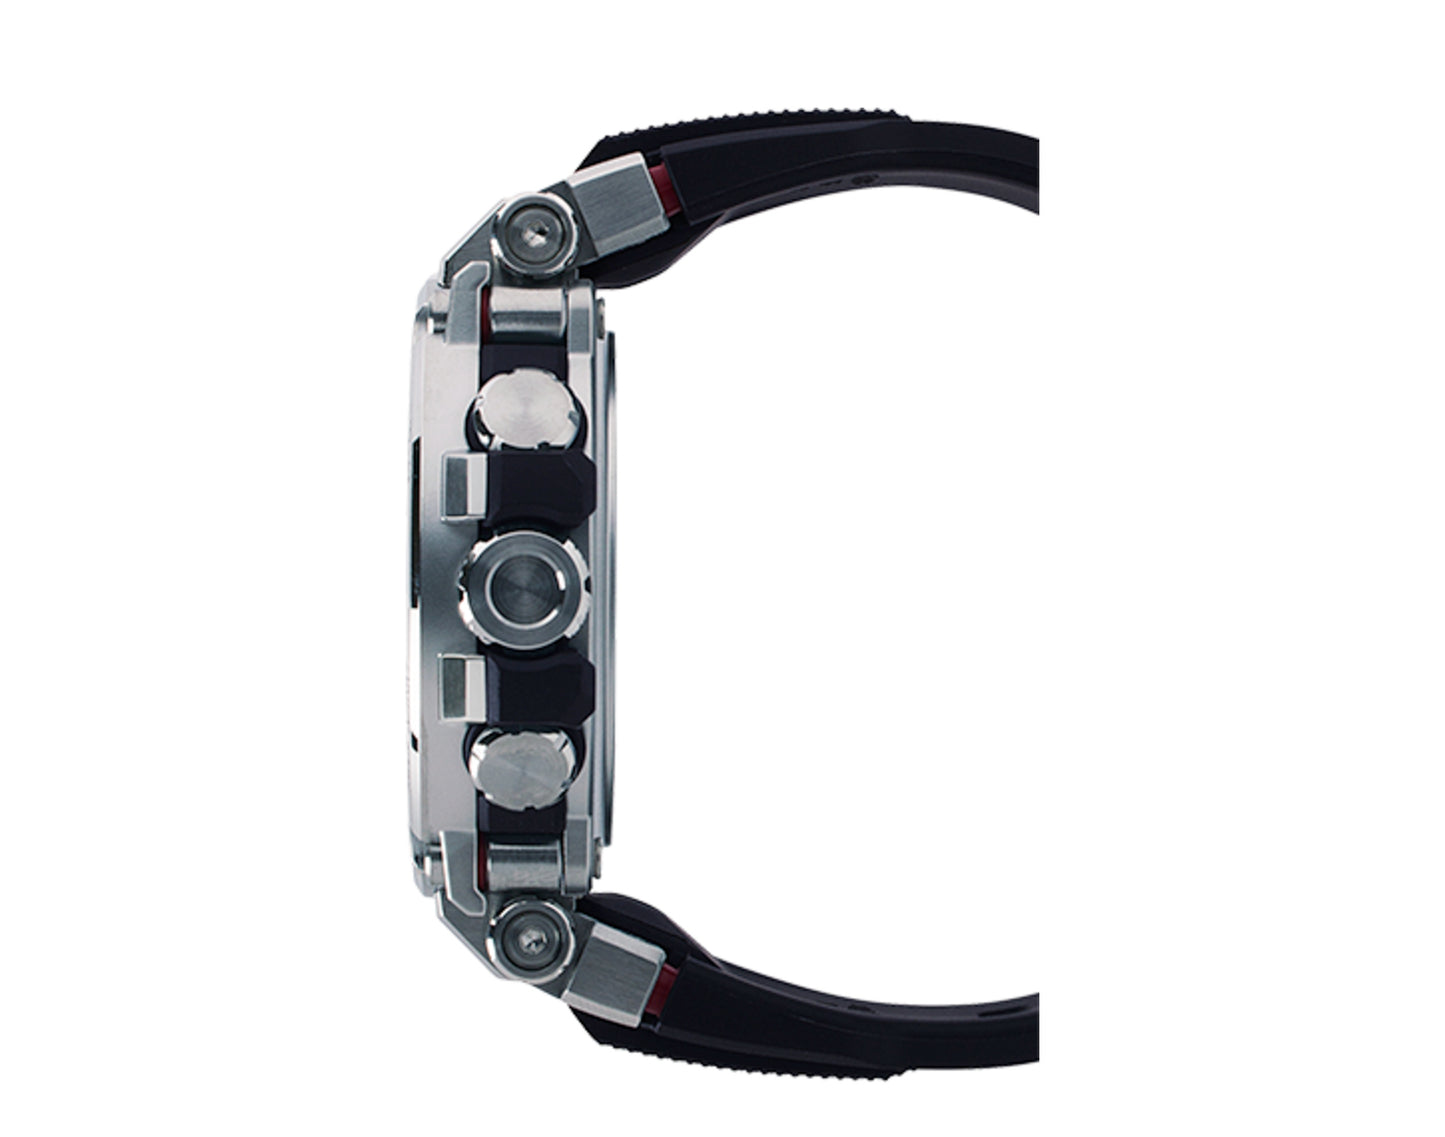 Casio G-Shock MTGB1000 MT-G Analog Chronograph Metal Resin Silver/Black Men's Watch MTGB1000-1A